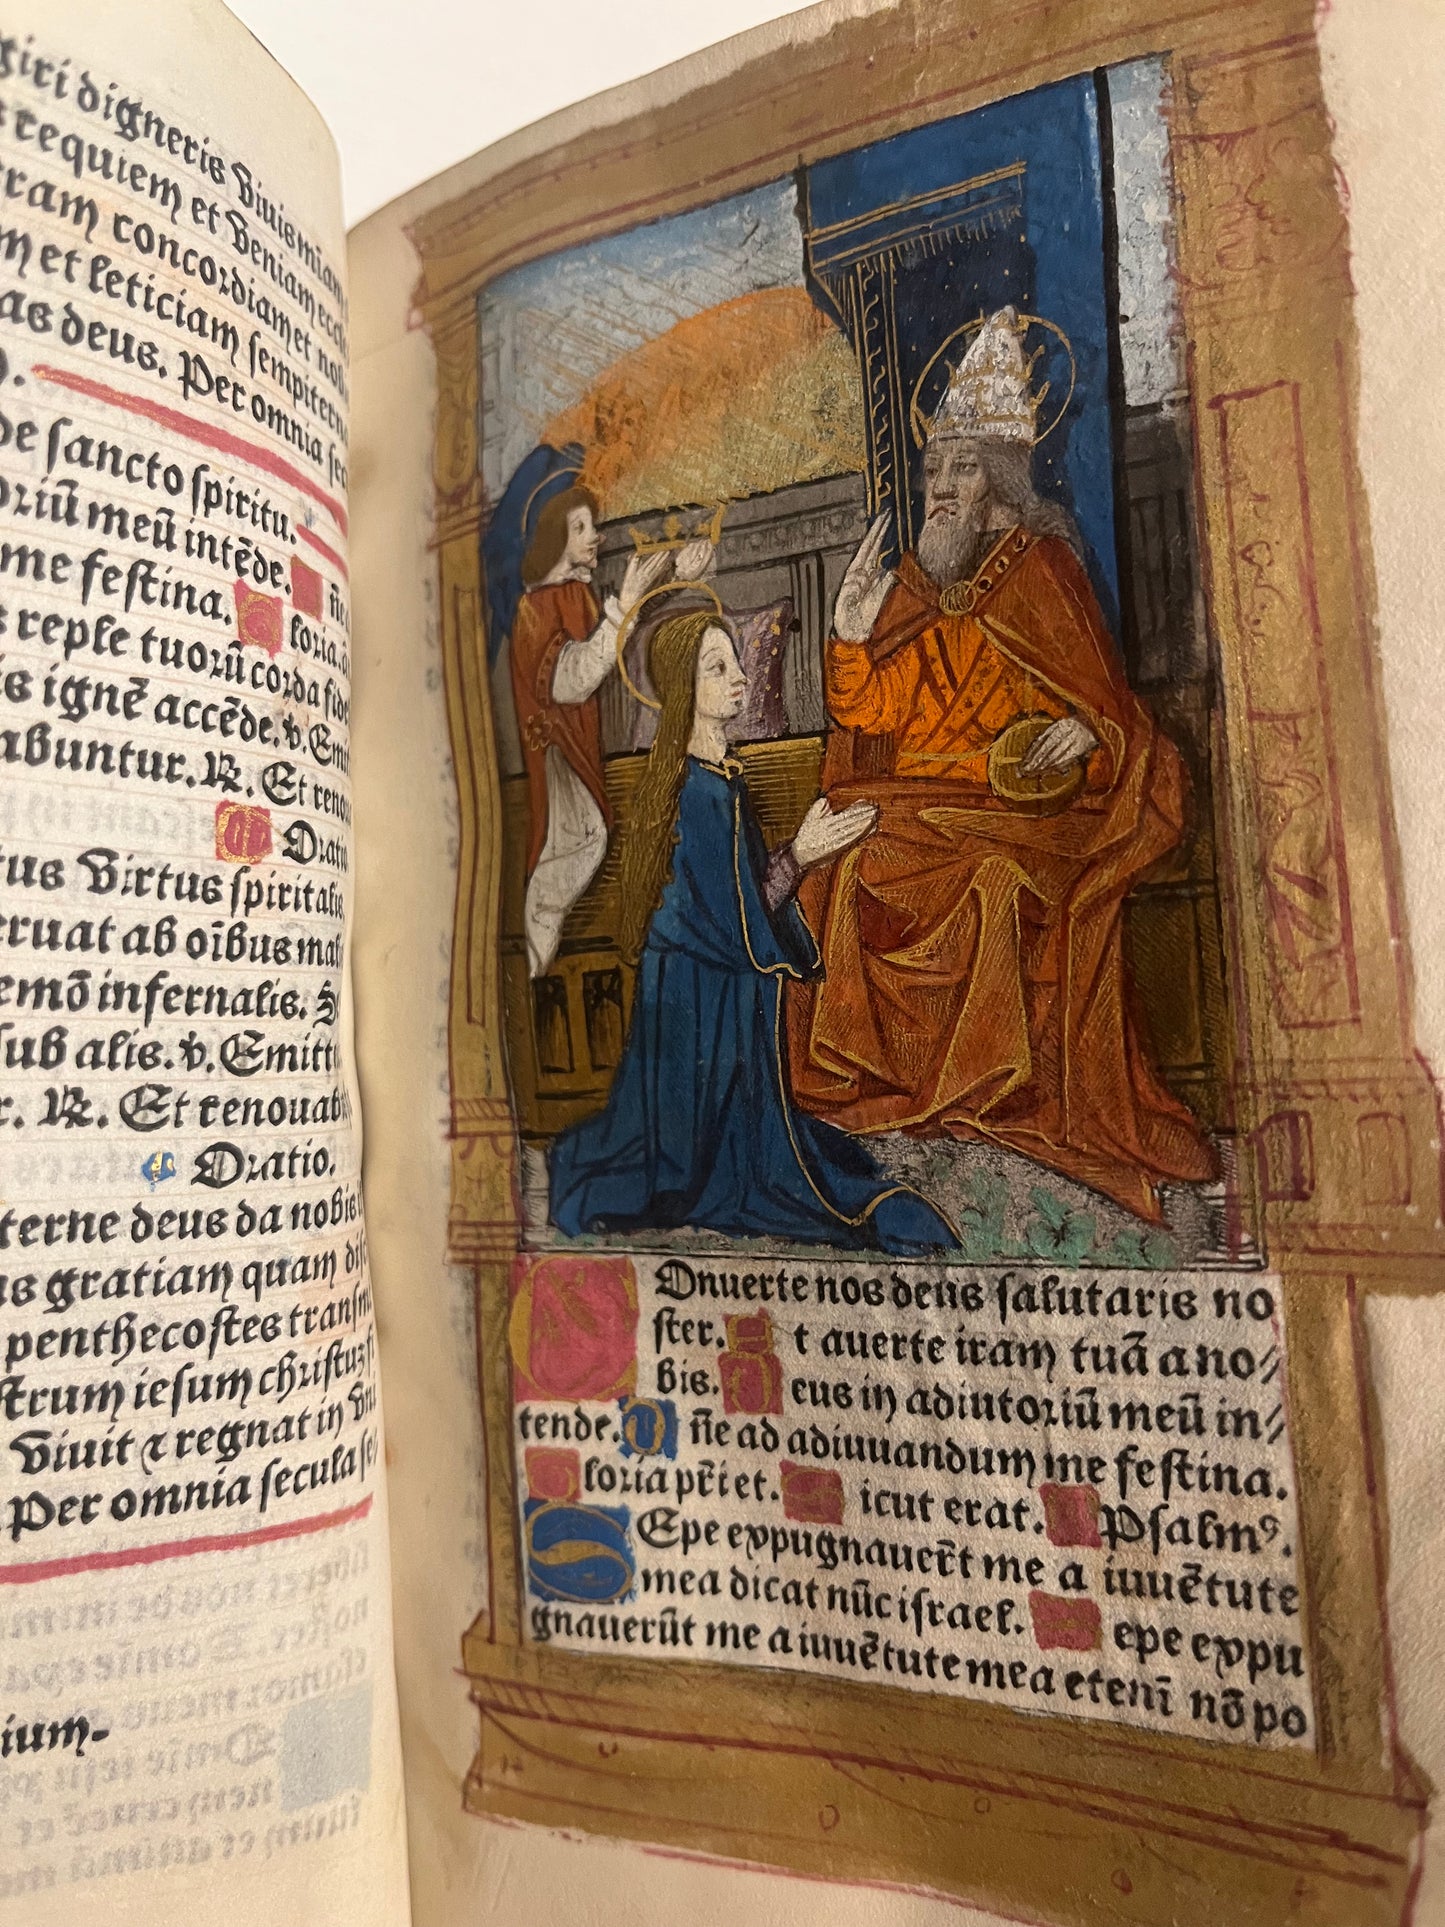 Post-Incunable ILLUMINATED Book of Hours - Heures a l'usaige de Rome - Paris, Anthoine Chappiel pour Gilles Hardouyn, 1504